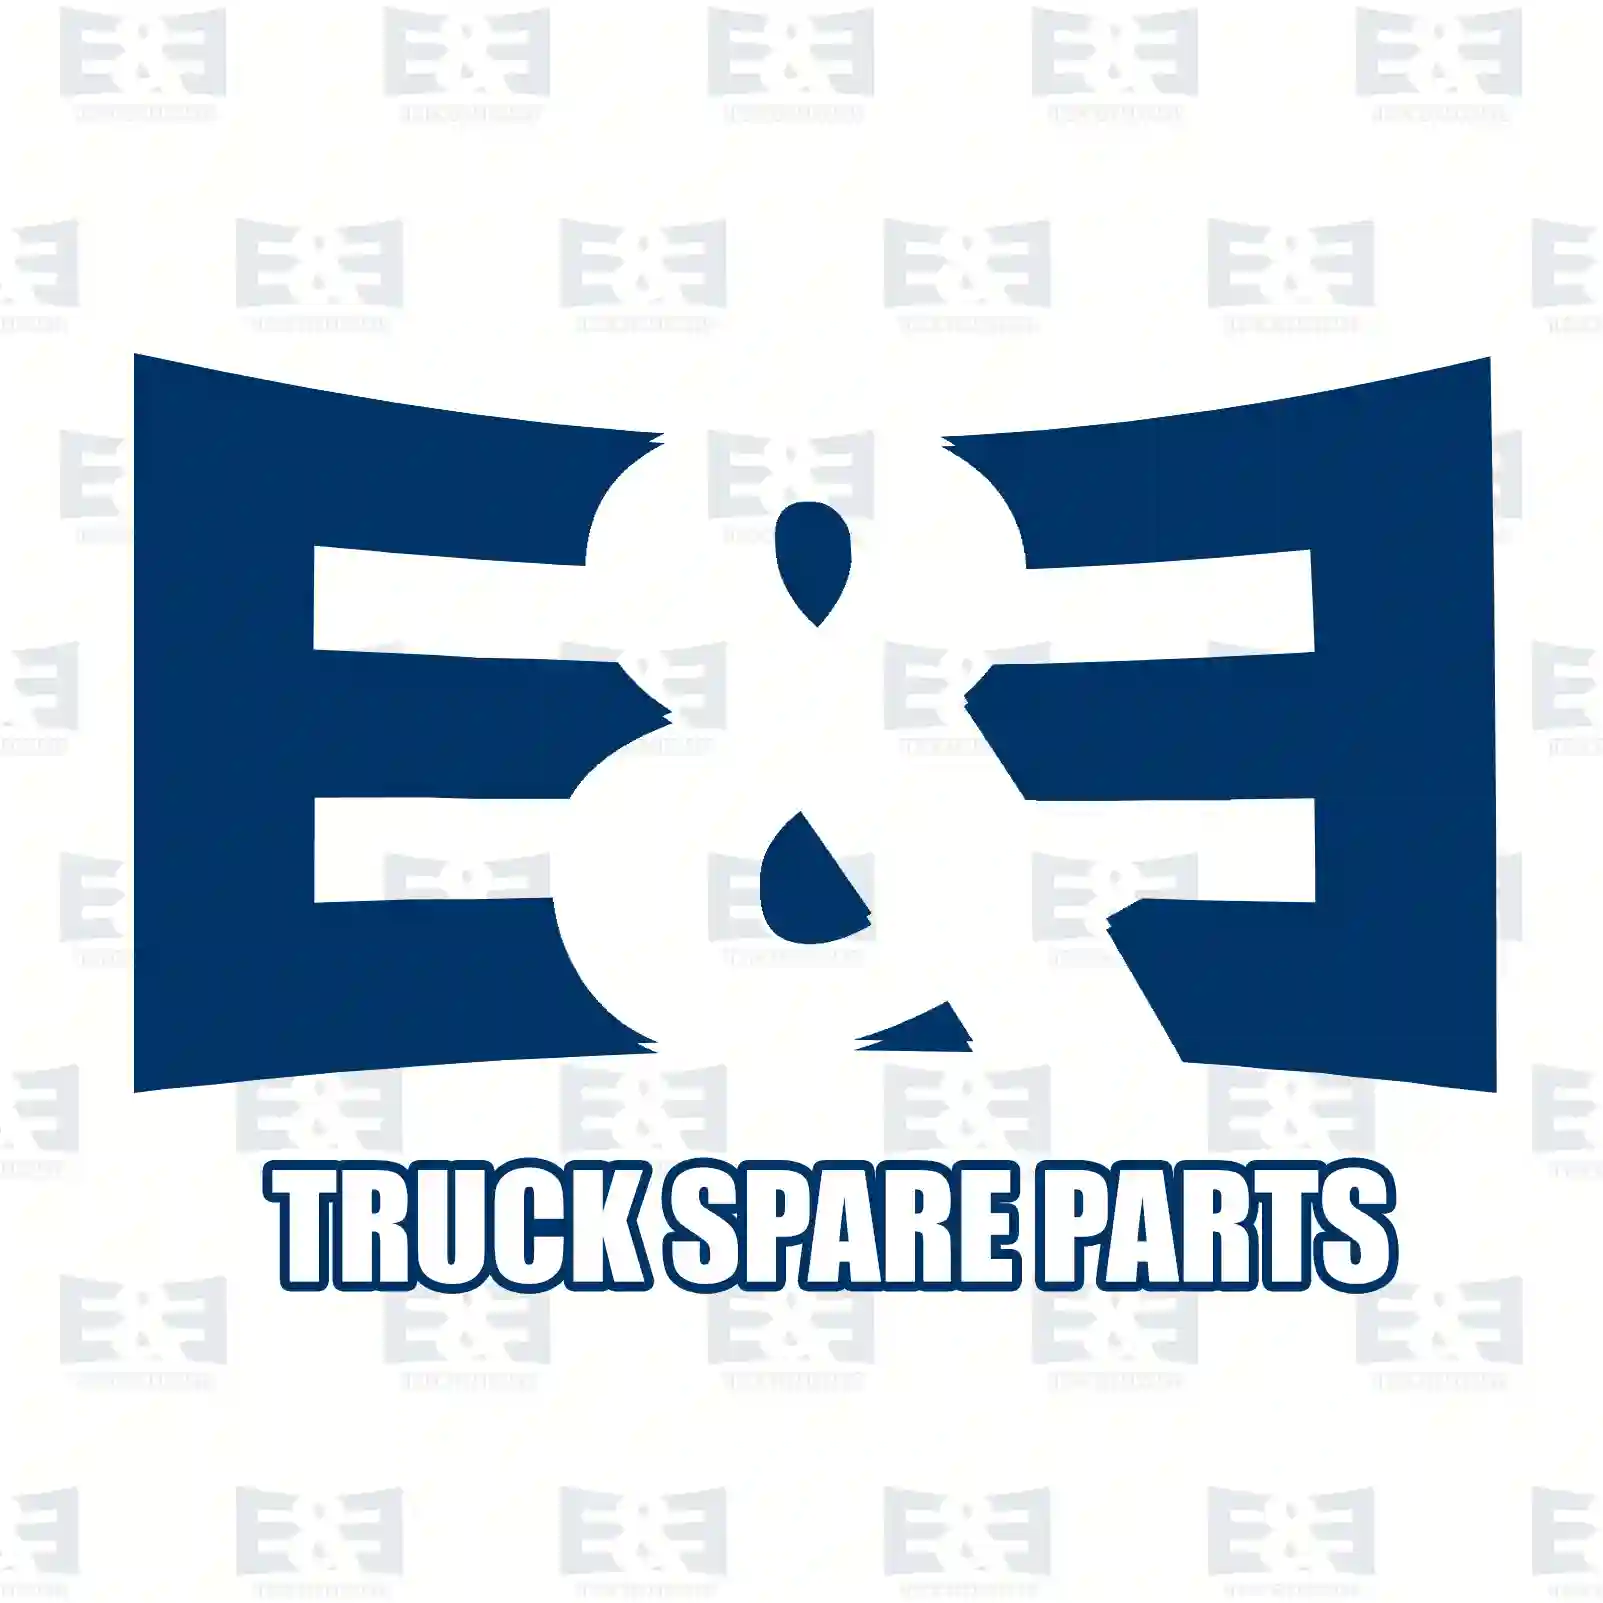 Ball joint, left hand thread, 2E2279484, 81953016204, , ||  2E2279484 E&E Truck Spare Parts | Truck Spare Parts, Auotomotive Spare Parts Ball joint, left hand thread, 2E2279484, 81953016204, , ||  2E2279484 E&E Truck Spare Parts | Truck Spare Parts, Auotomotive Spare Parts